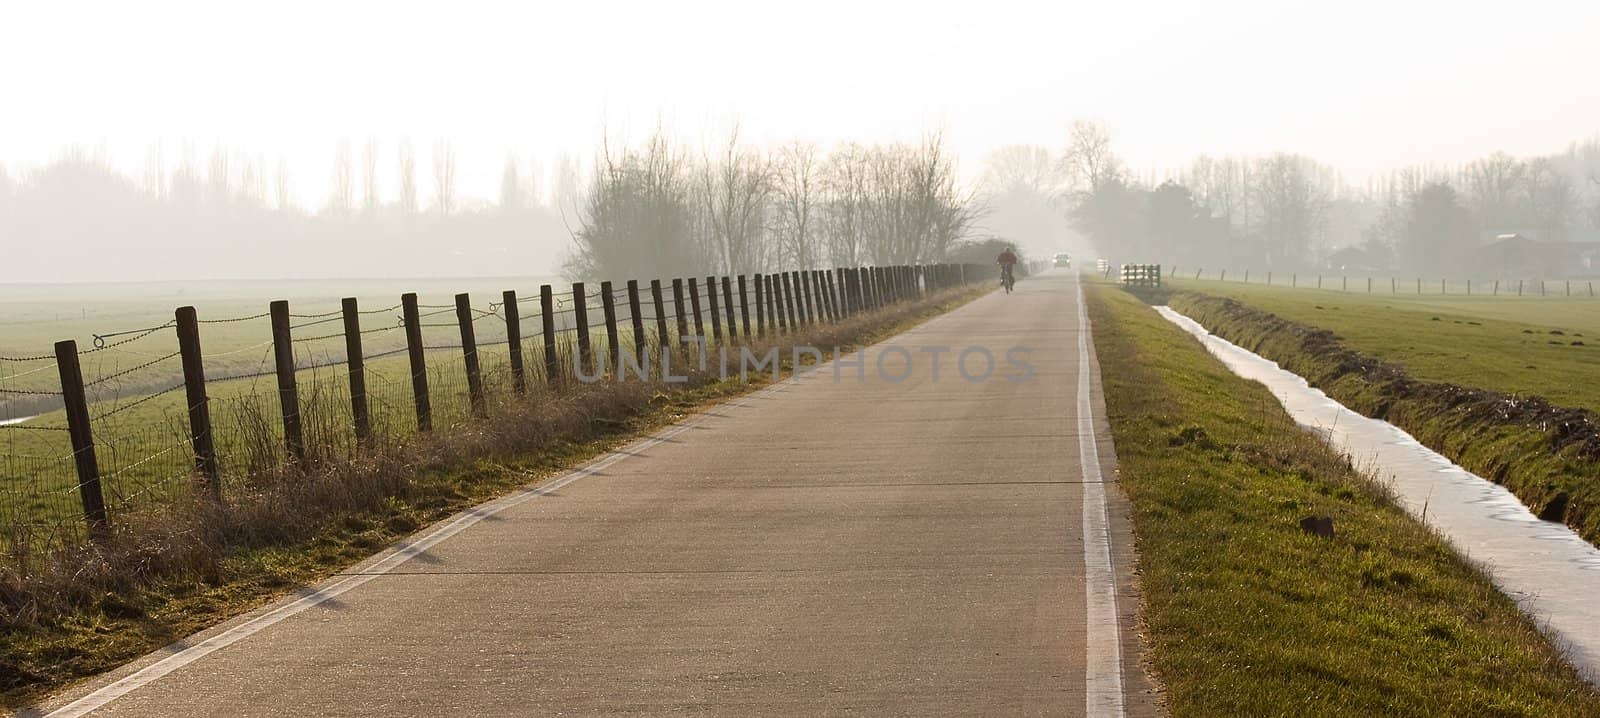 Long straight polderroad on misty winterday